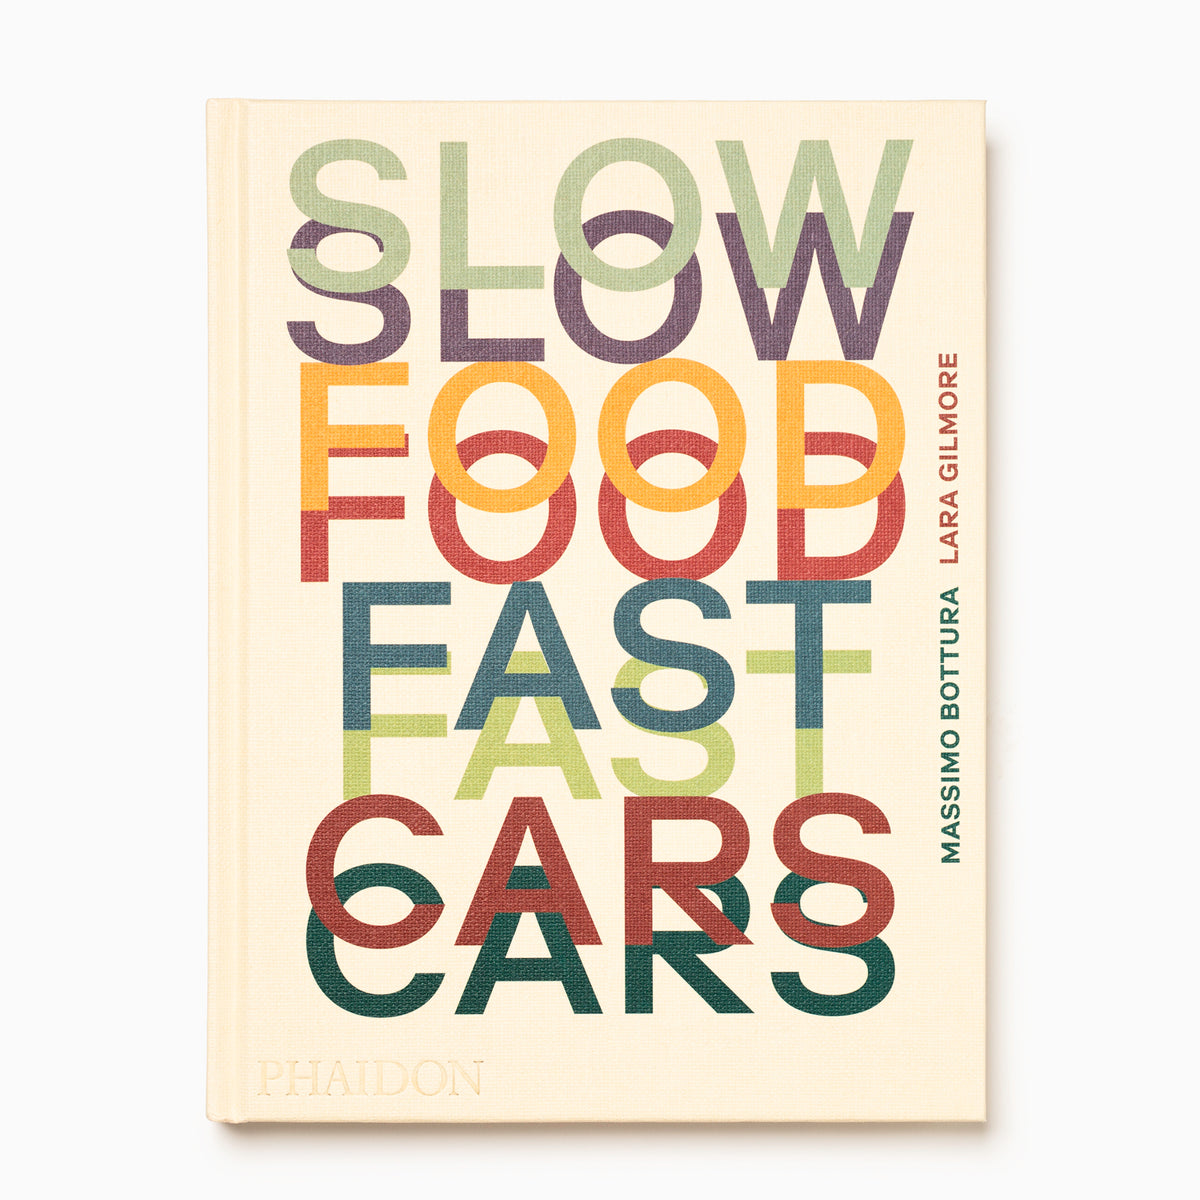 Fast Cars, Slow Food